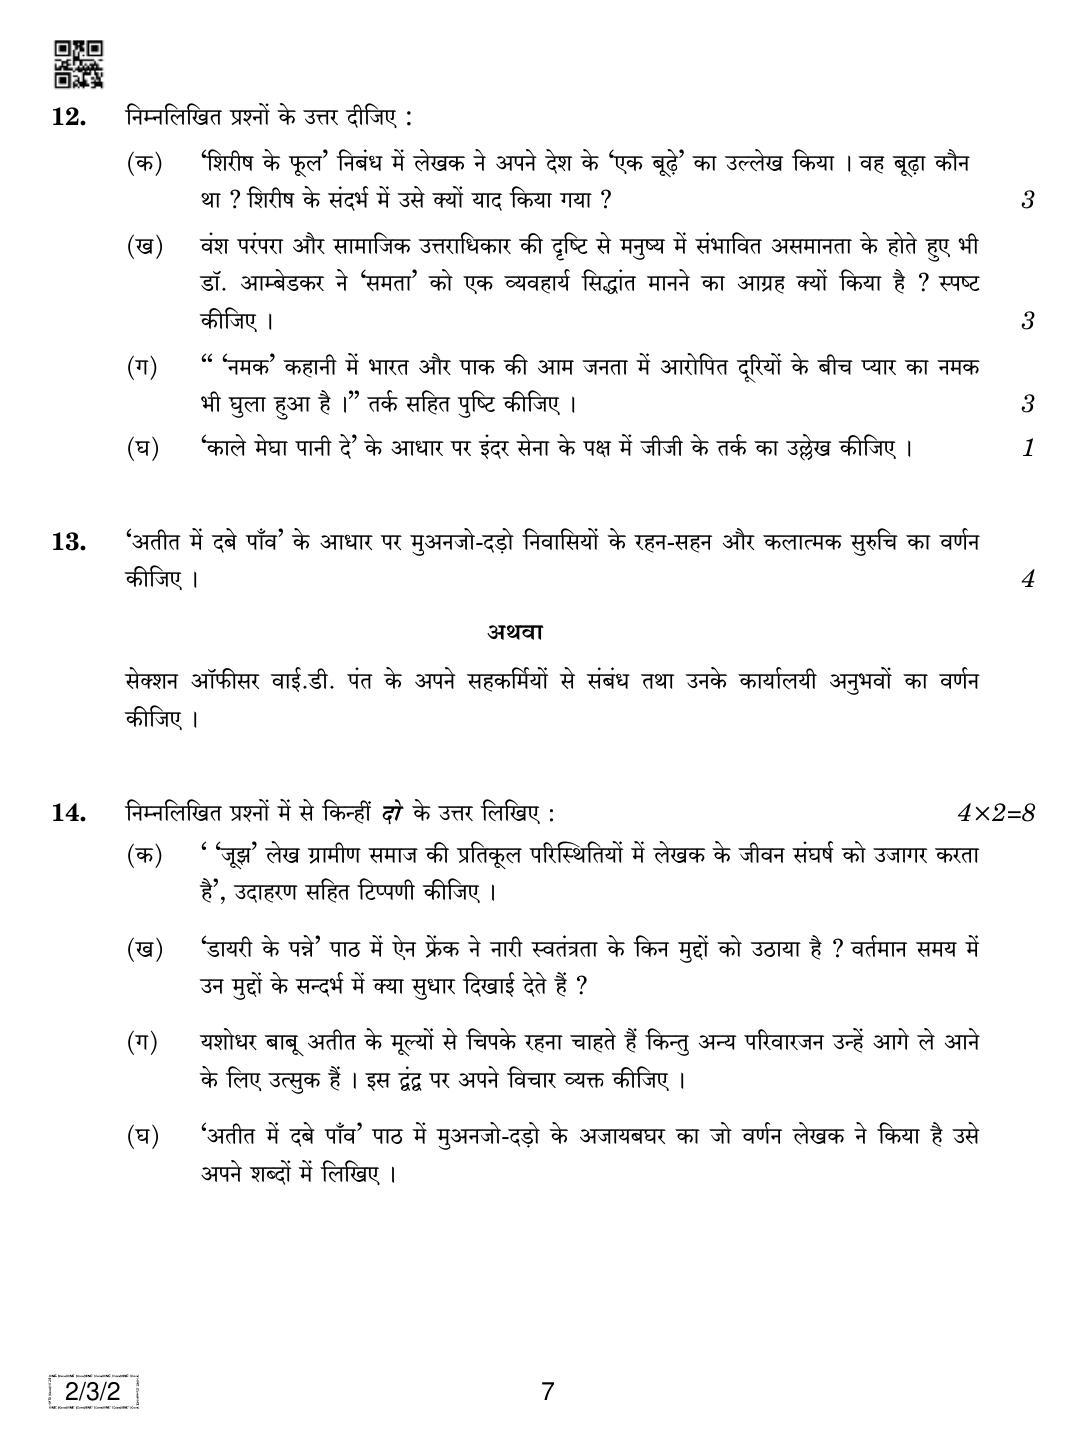 CBSE Class 12 2-3-2 Hindi Core 2019 Question Paper - Page 7